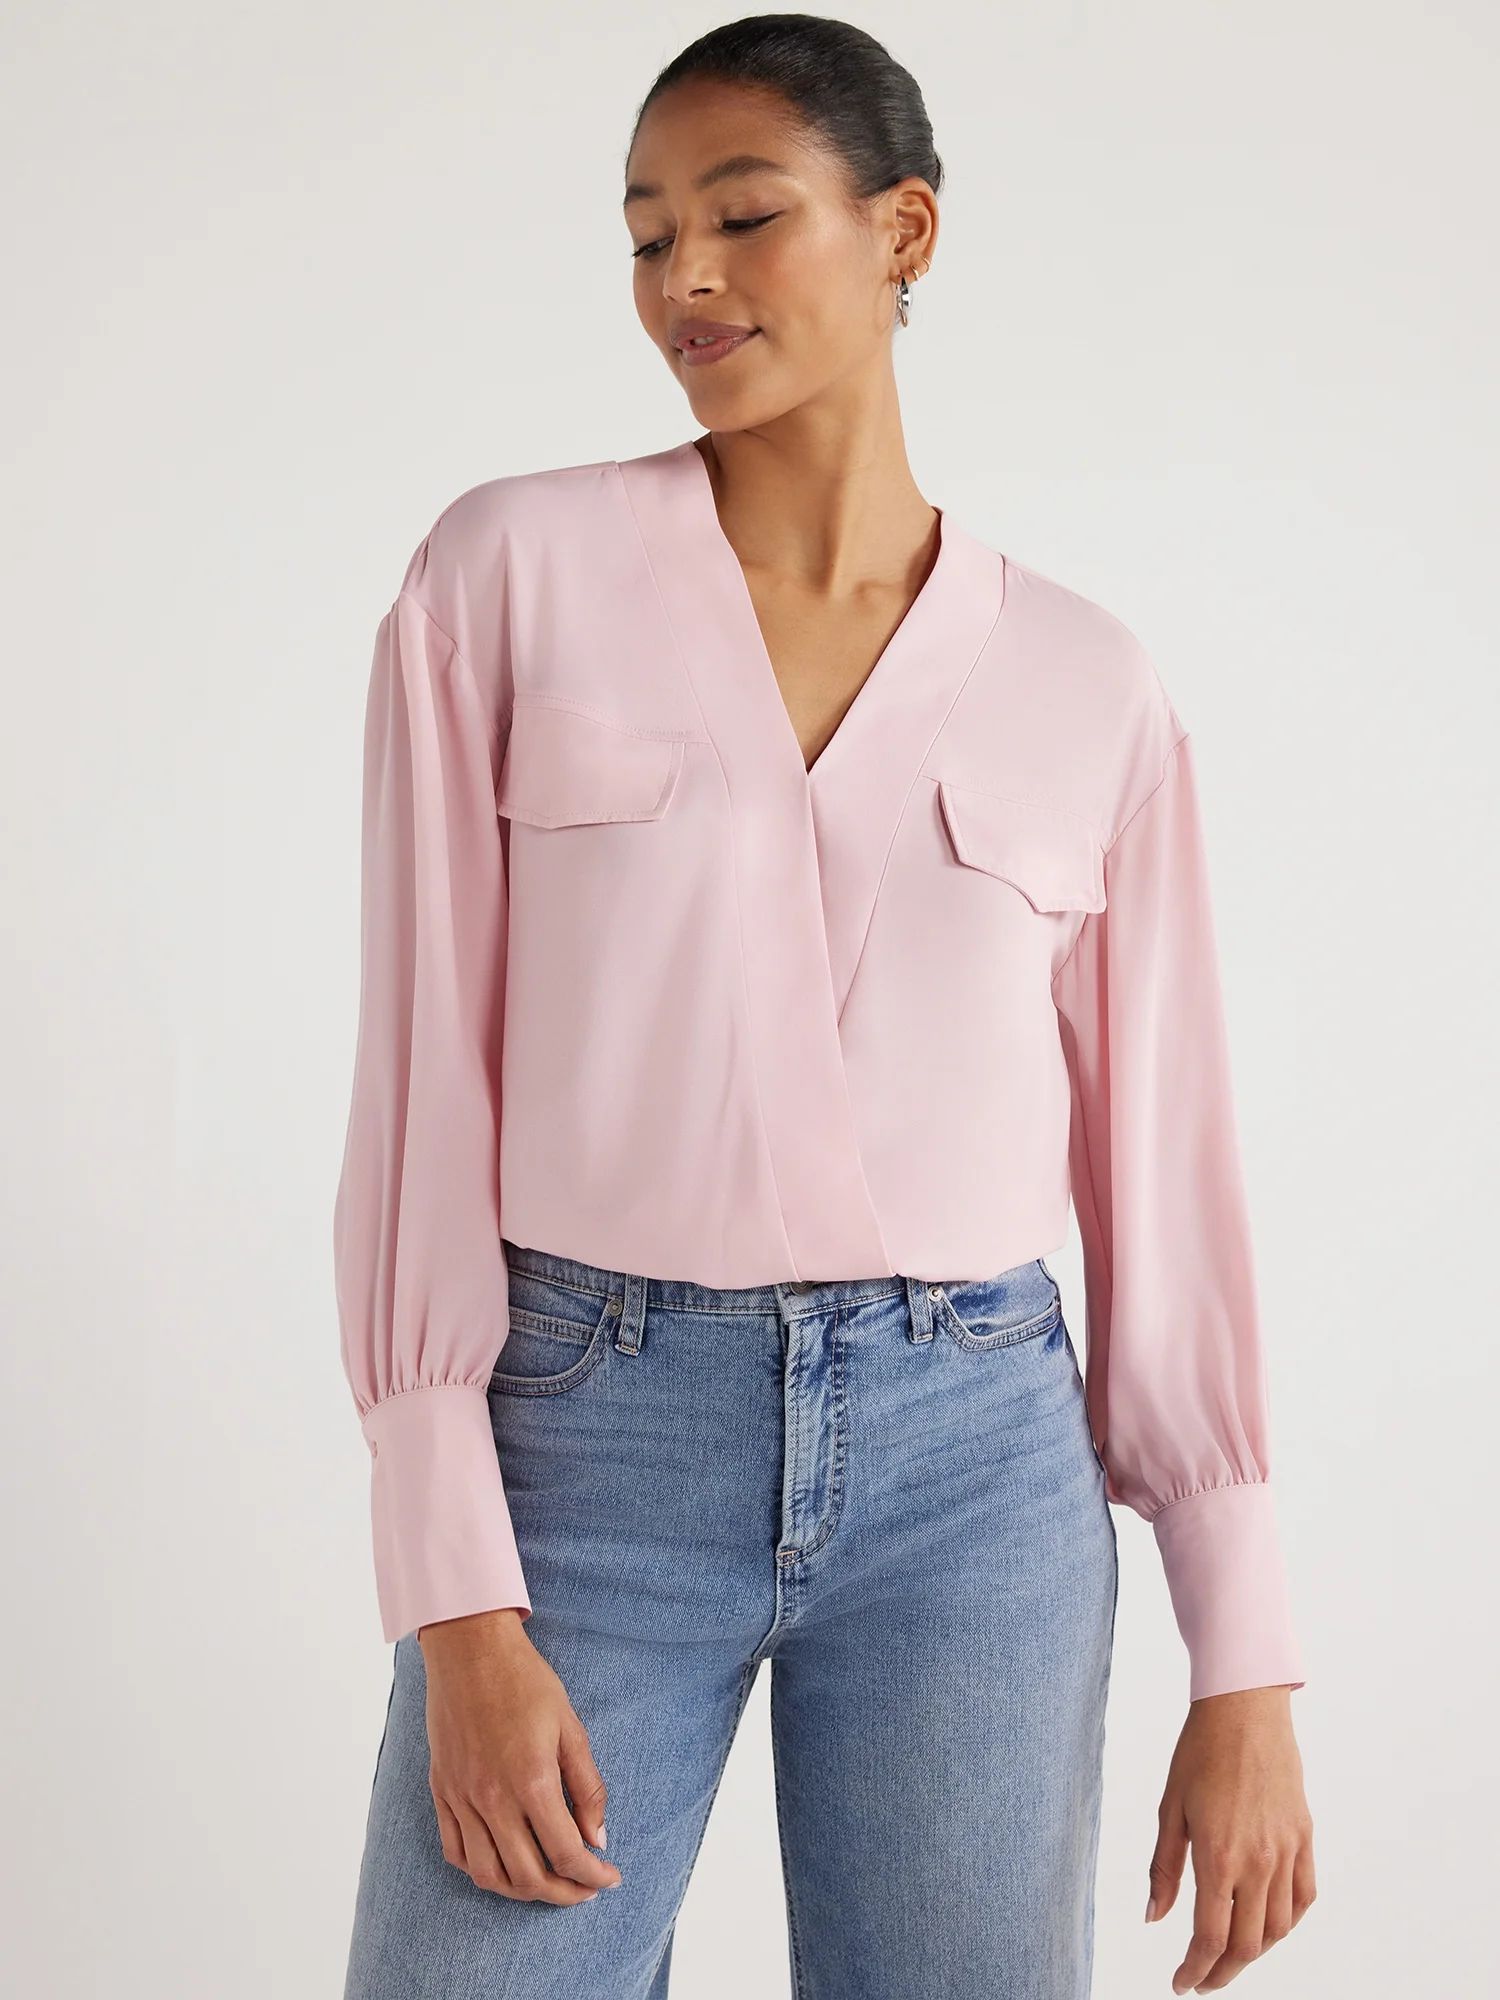 Scoop Women’s Shirt Bodysuit with Long Sleeves, Sizes XS-XXL | Walmart (US)